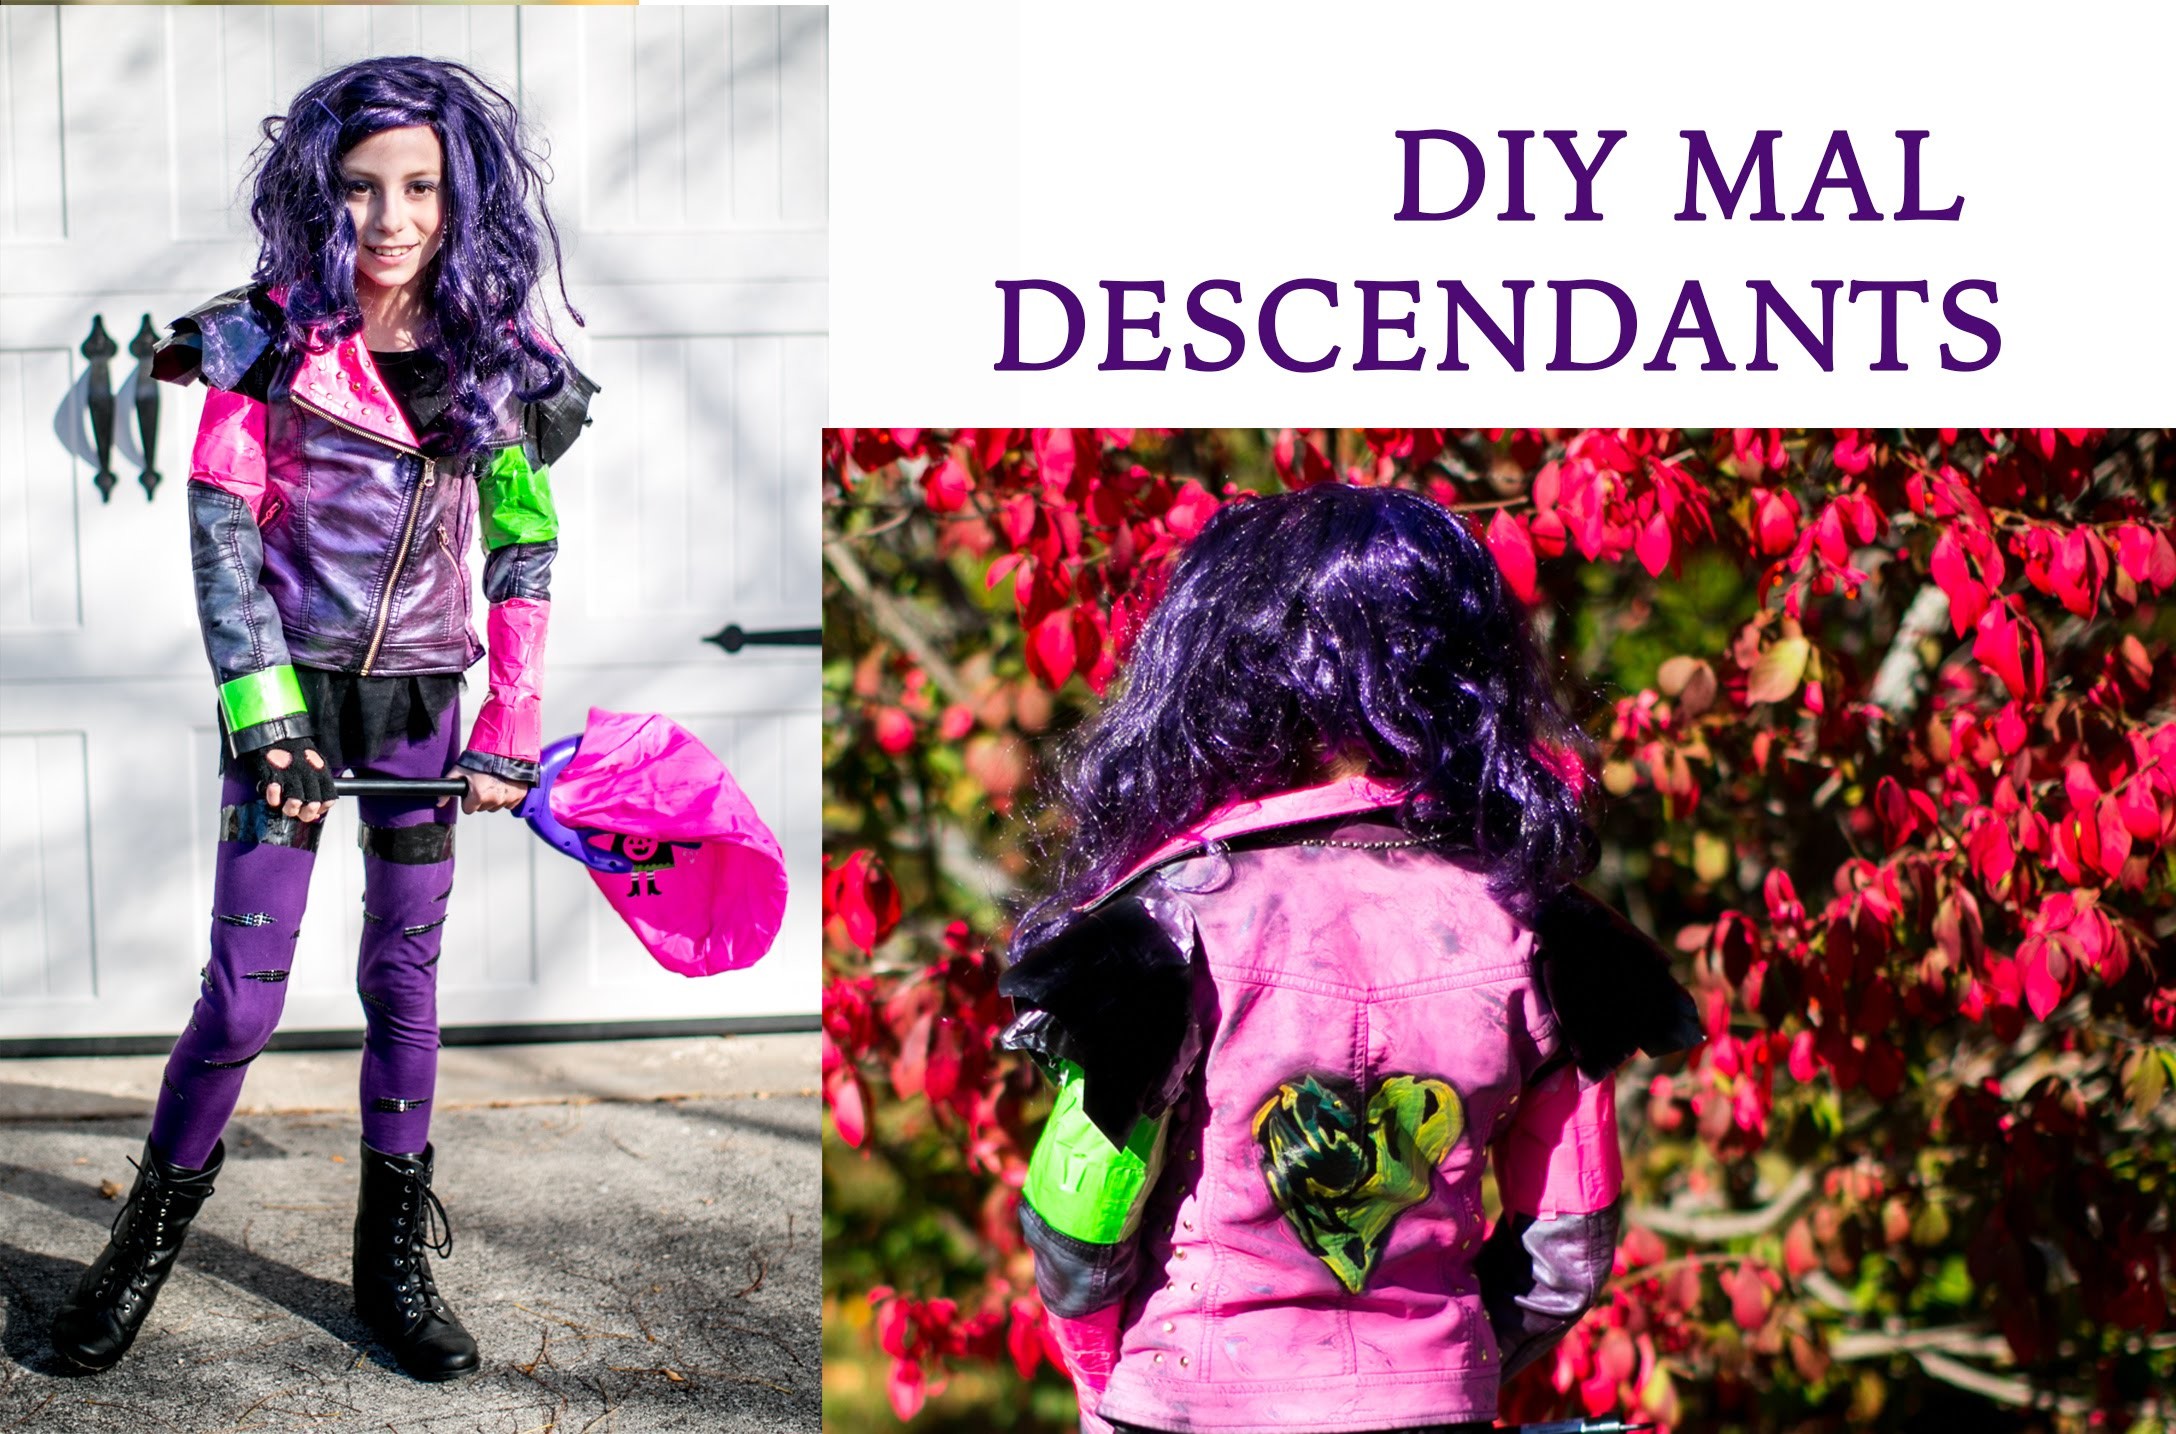 Disney Descendants Mal's Costume full DIY tutorial.